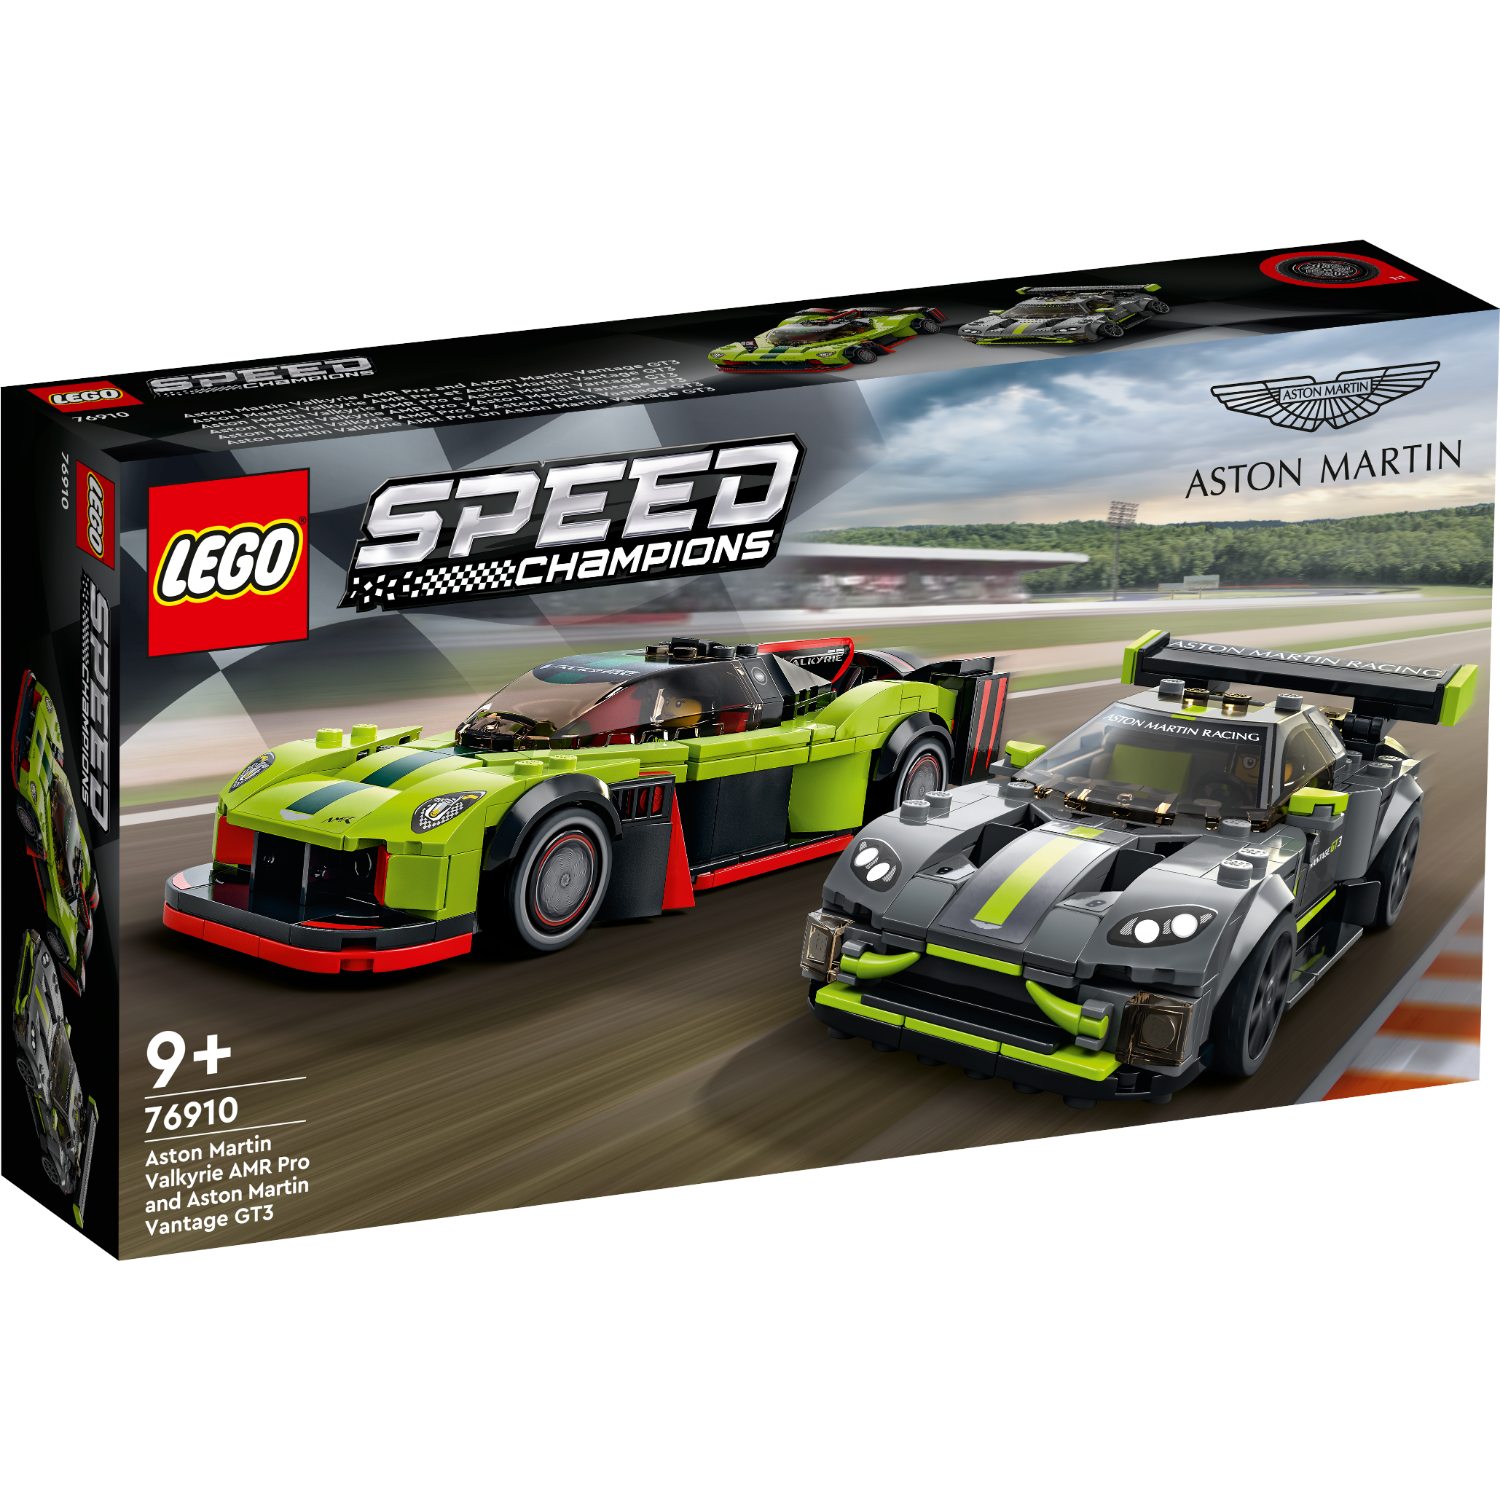 LEGO SPEED CHAMPIONS 76910 ASTON MARTIN VALKYRIE AMR PRO & A